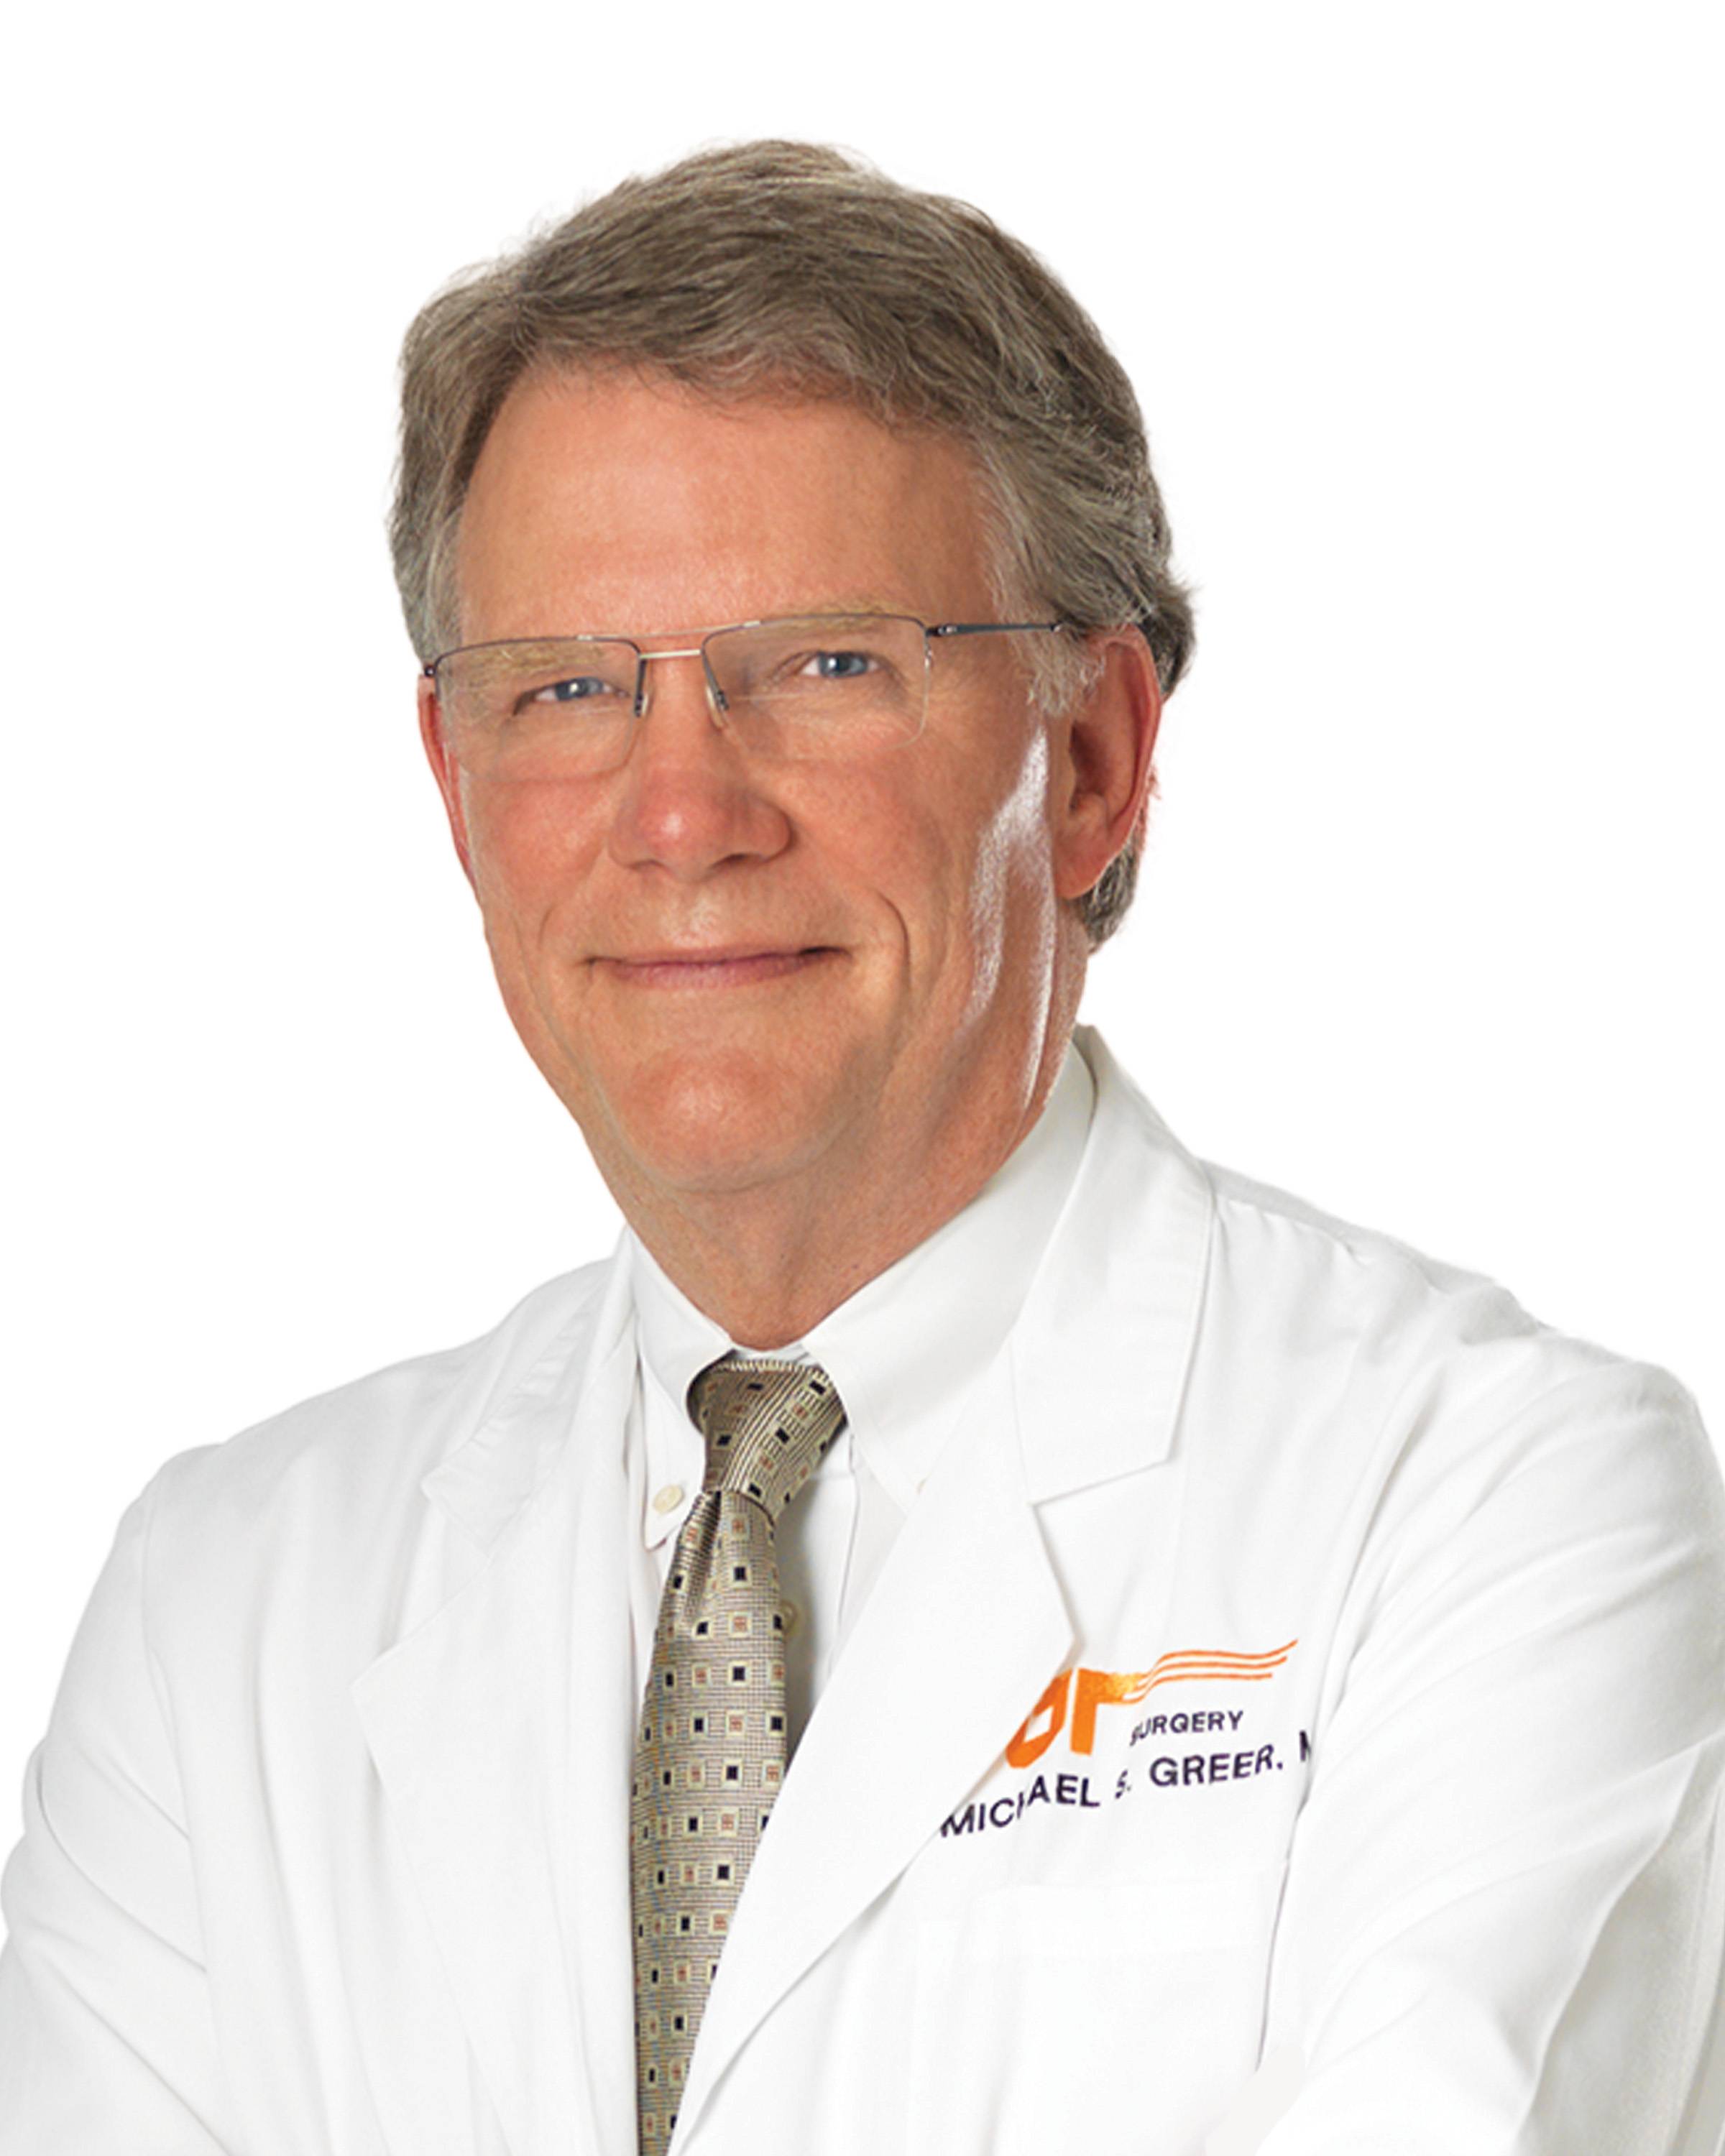 Michael S. Greer, MD, FACS, FPVI), Medical Director and Managing Partner, USA